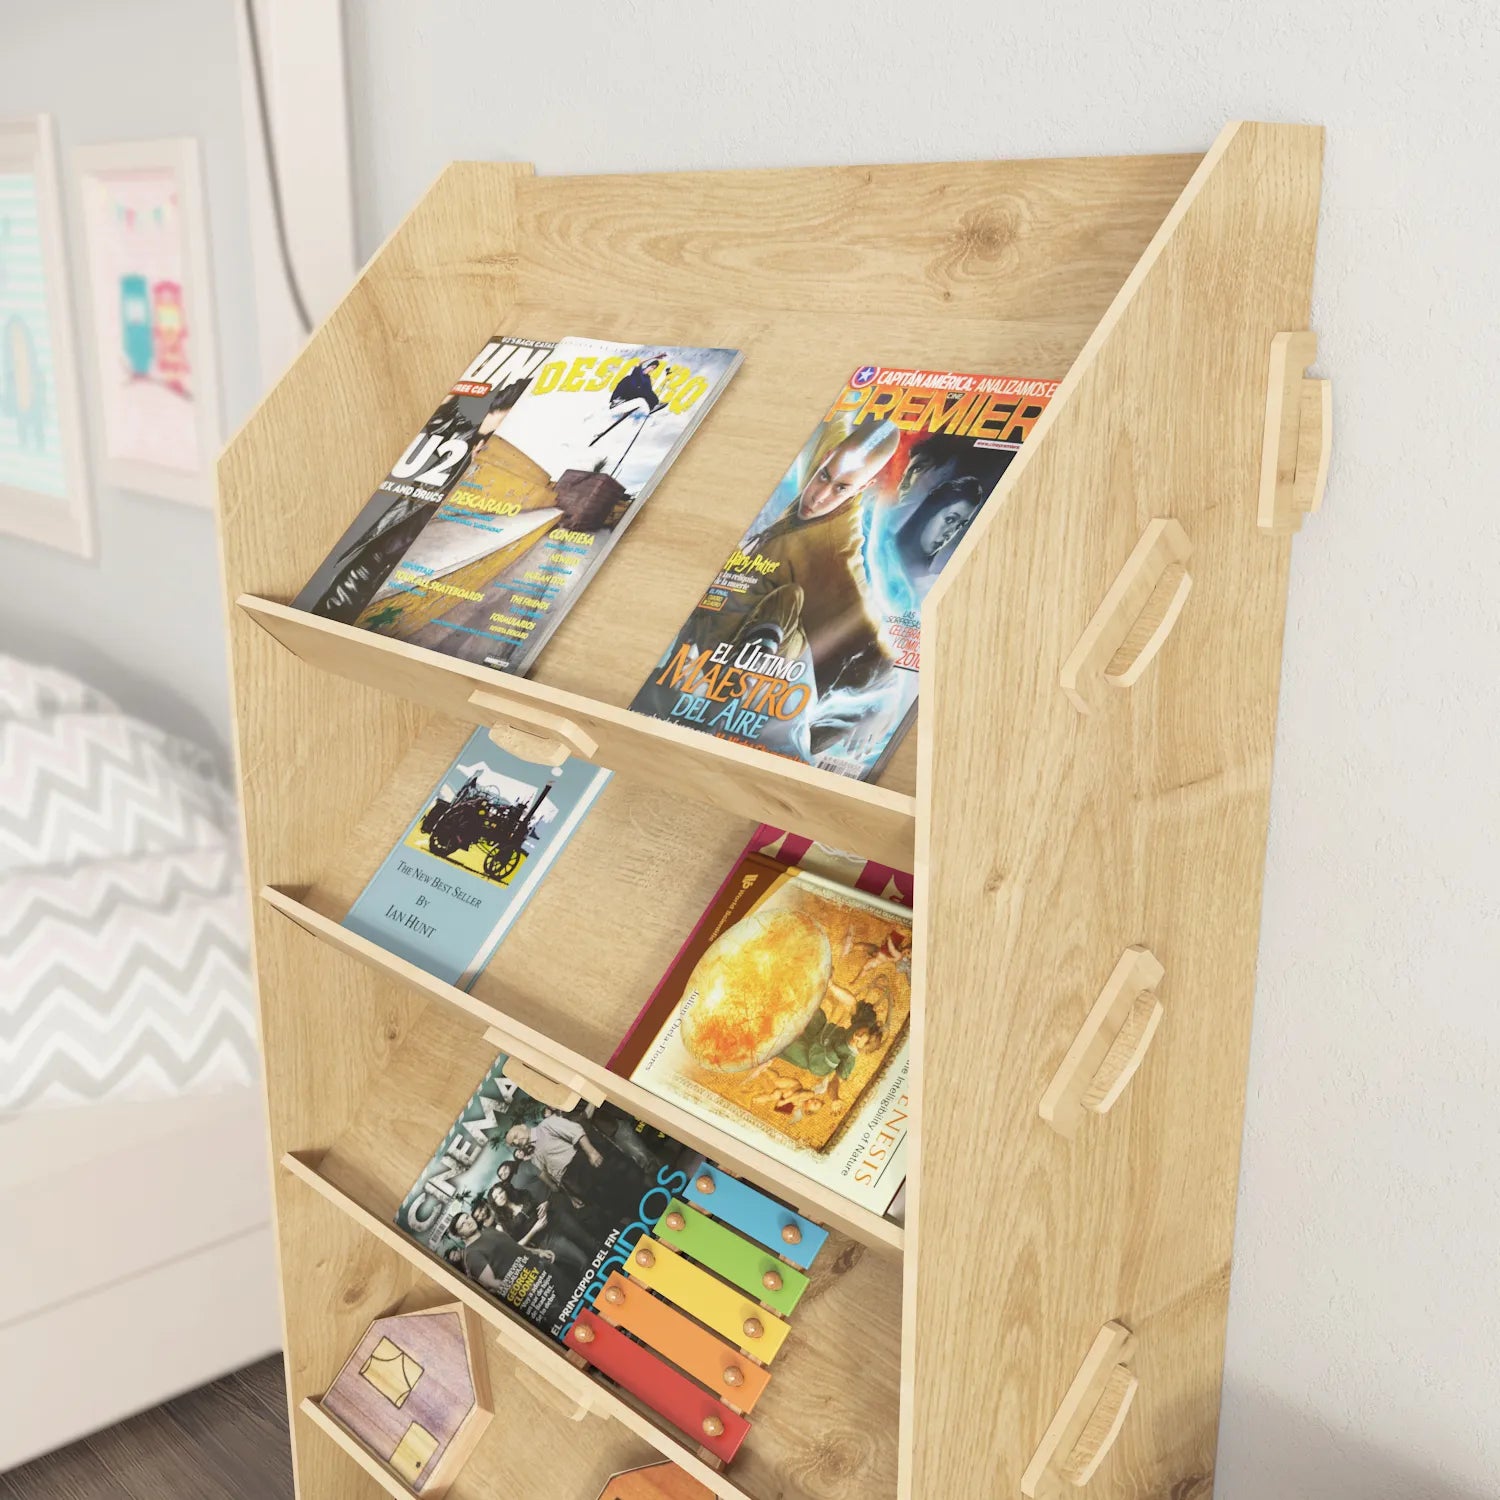 Aros 39" Tall MDF Bookcase | Bookshelf | Display Unit